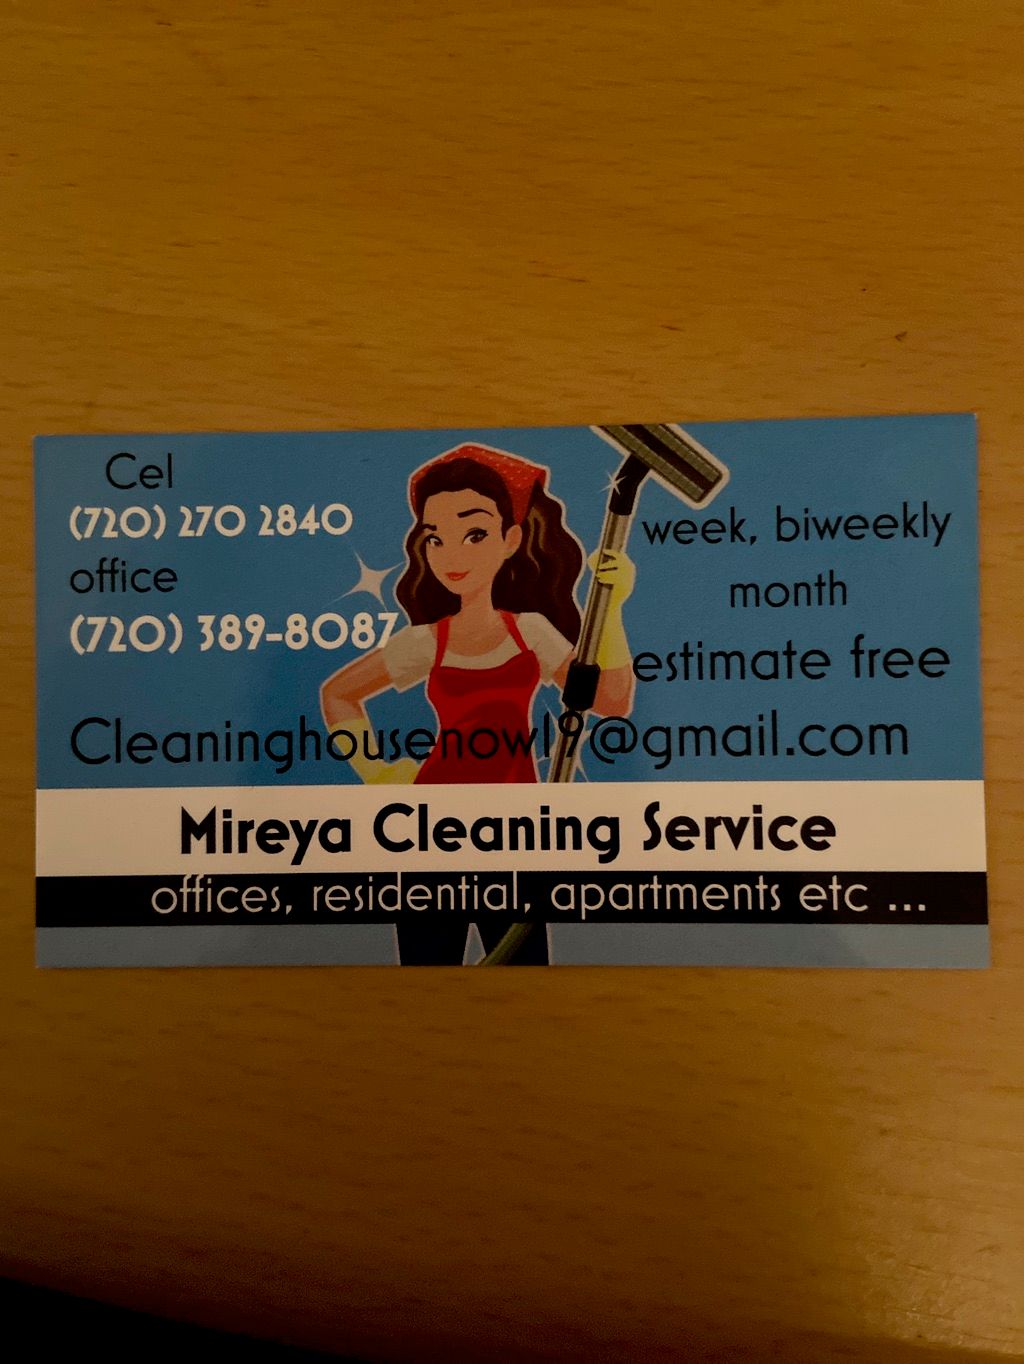 Mireya cleaning service